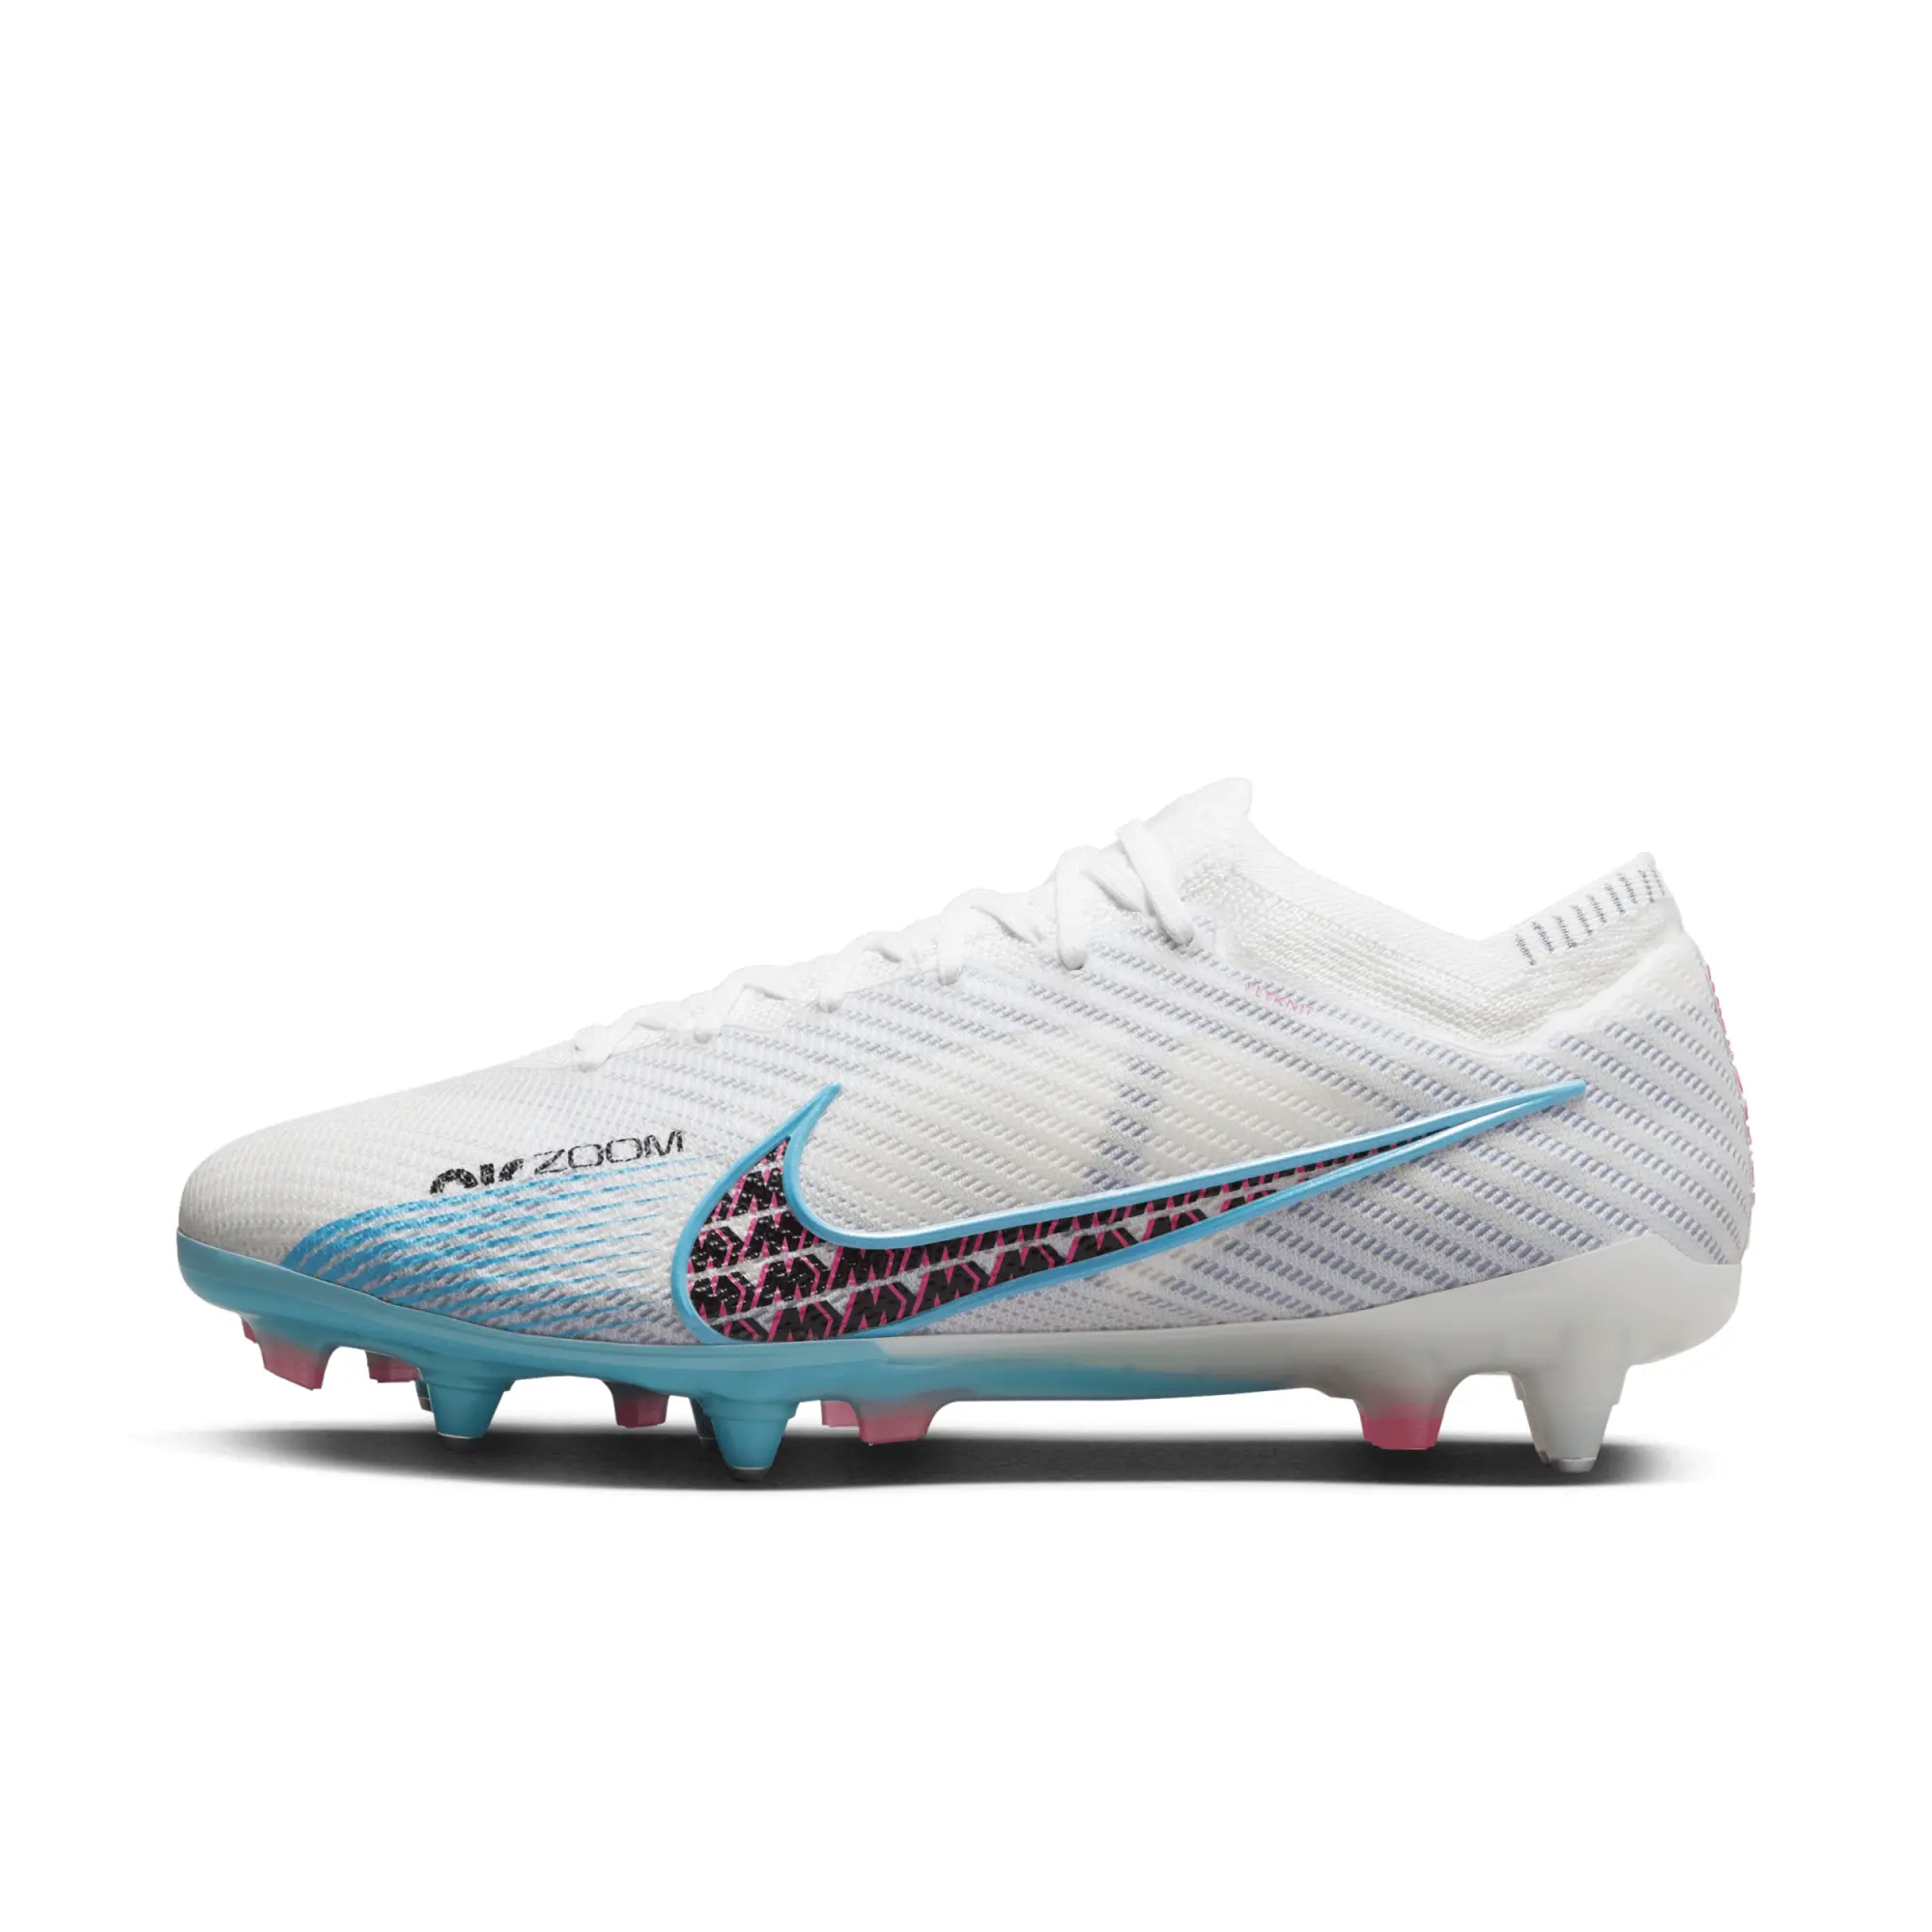 Nike Mercurial Vapor Elite Soft Ground Football Boots - White